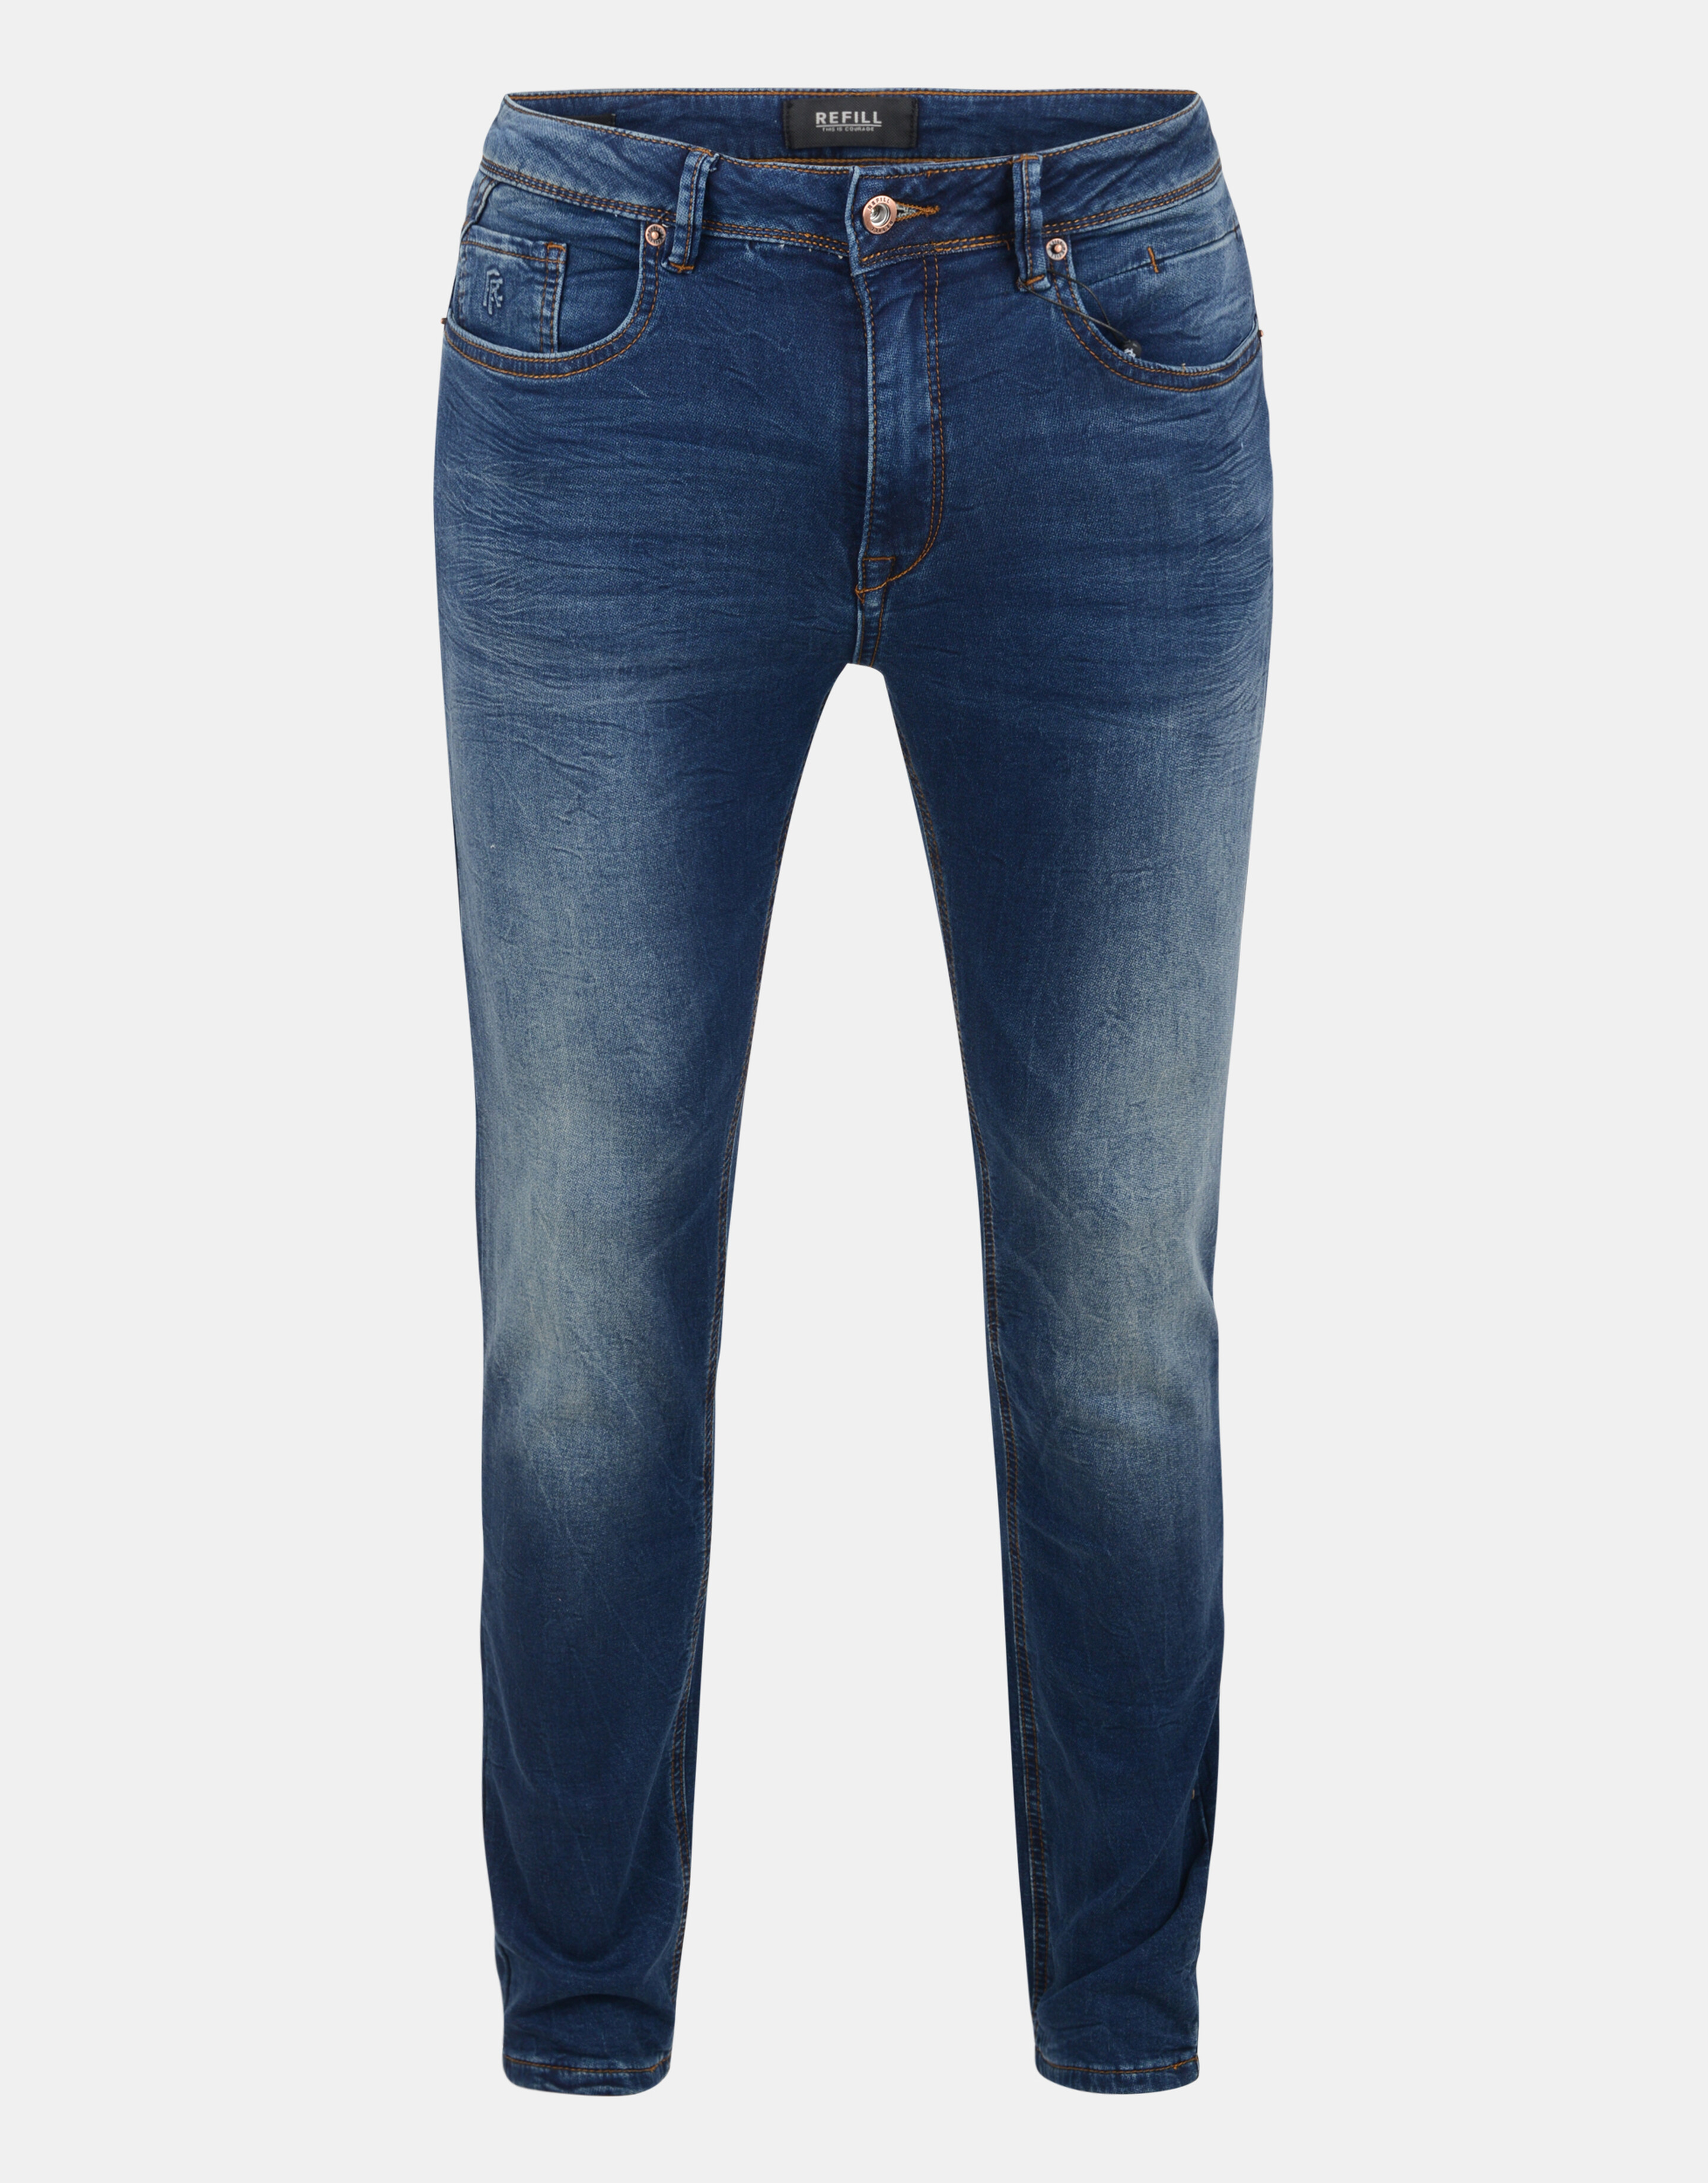 Lucas Slim Jeans L36 Refill